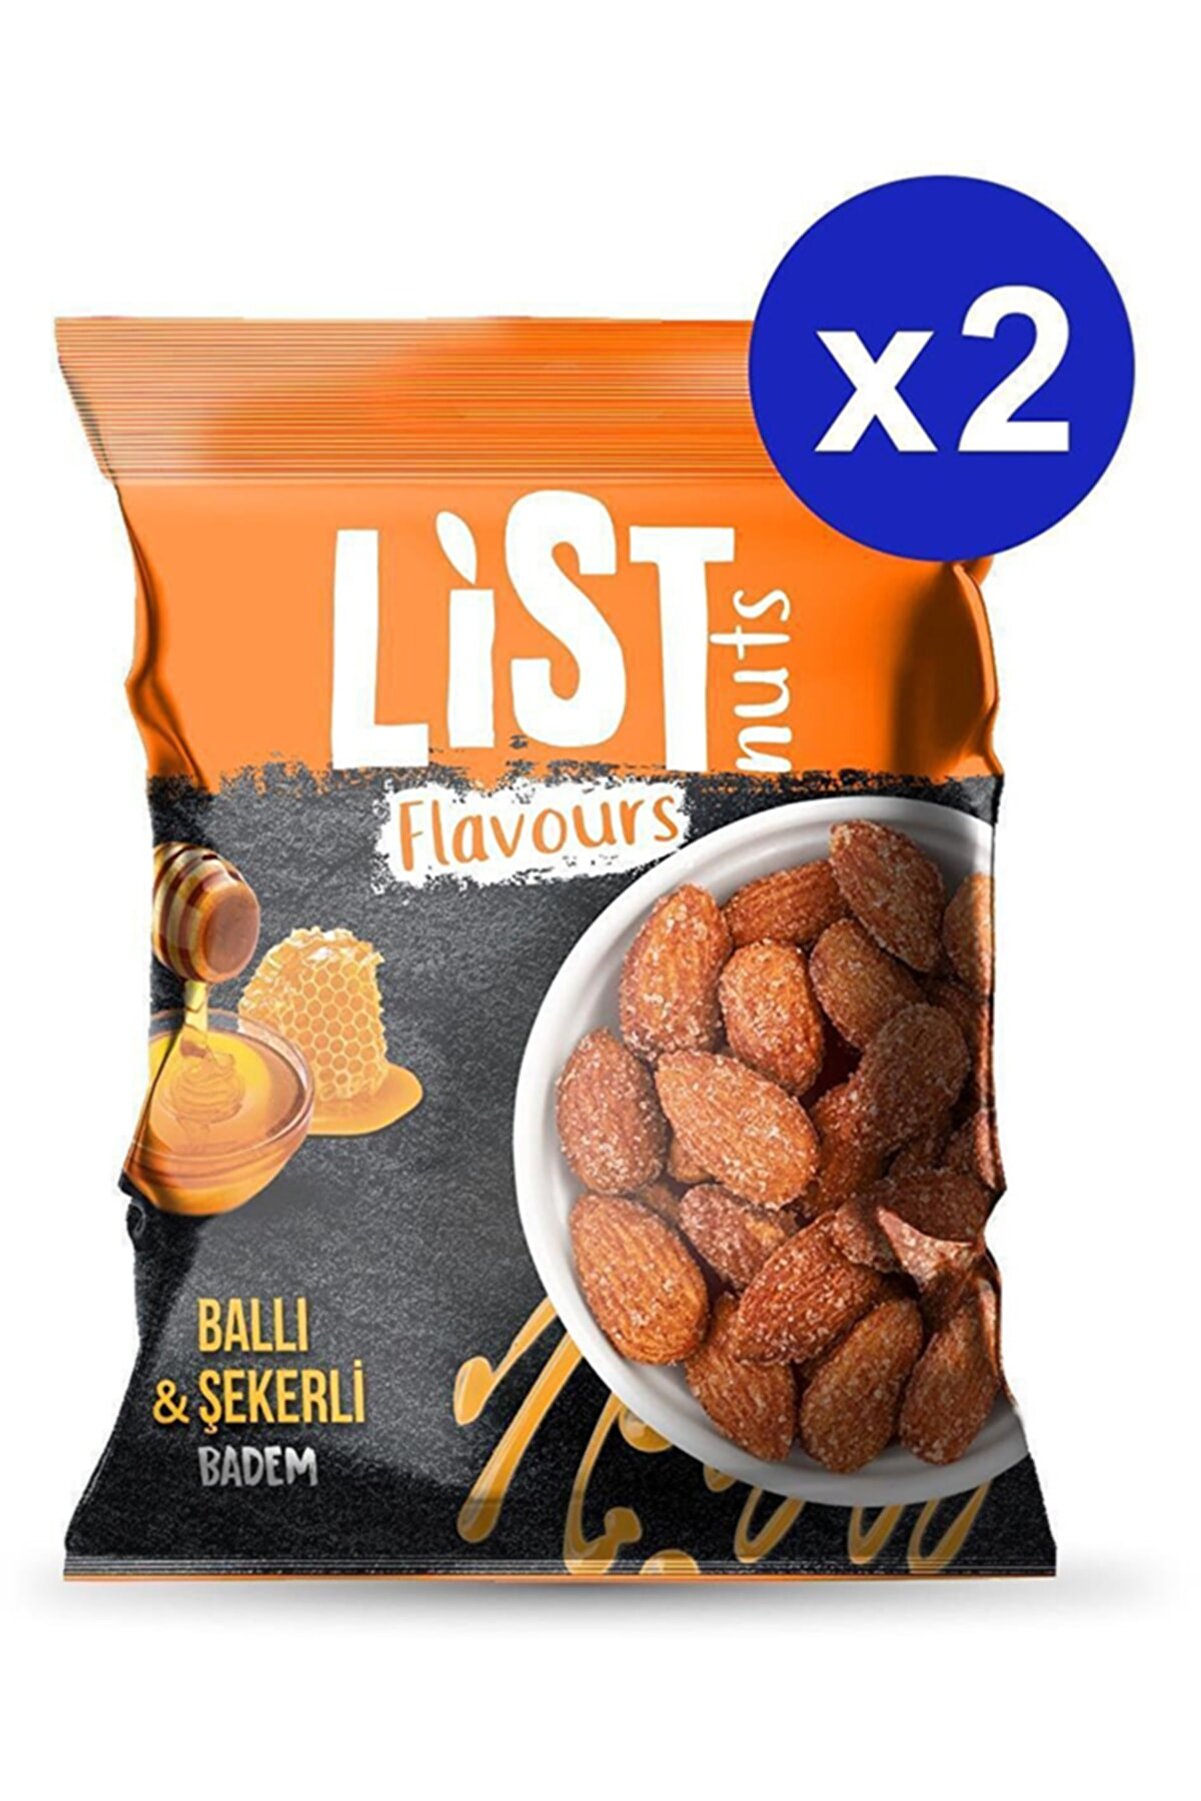 List Flavours Ballı & Şekerli Badem 2 X 100 G